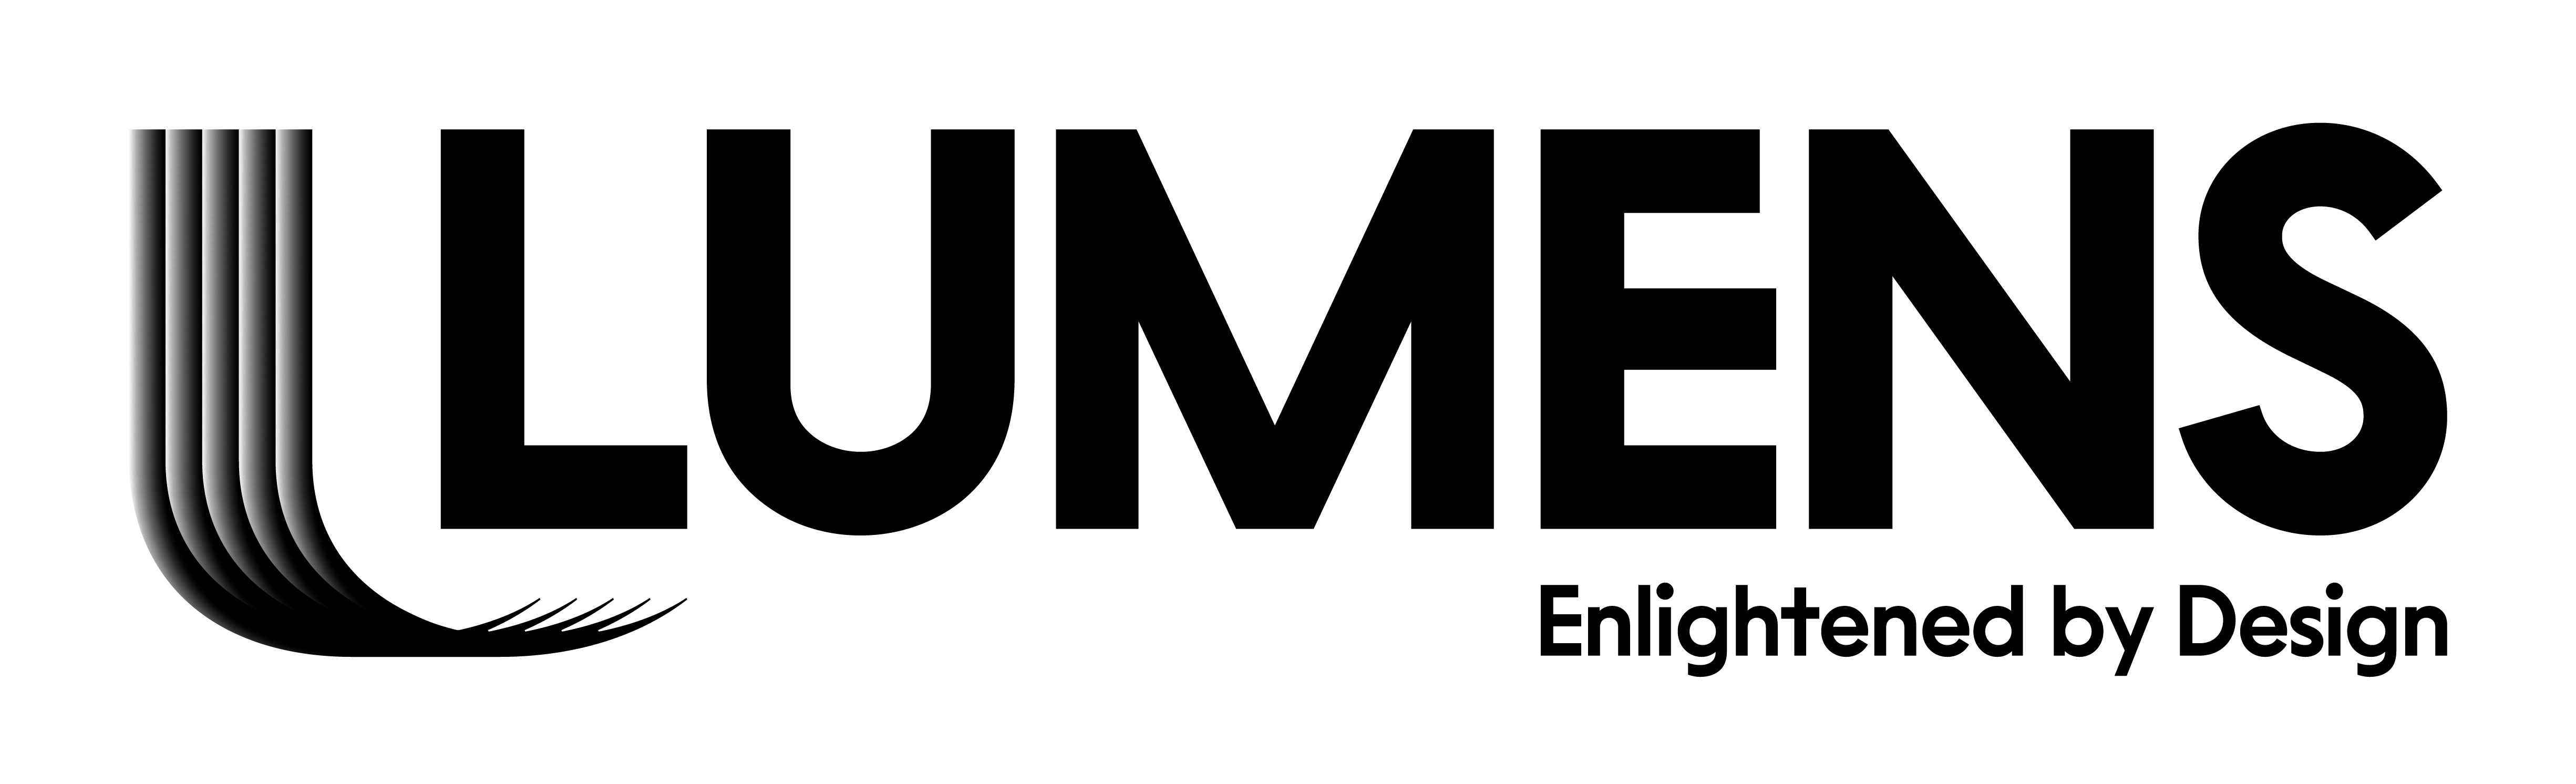 Lumens.com new brand identity: Enlightened by Design